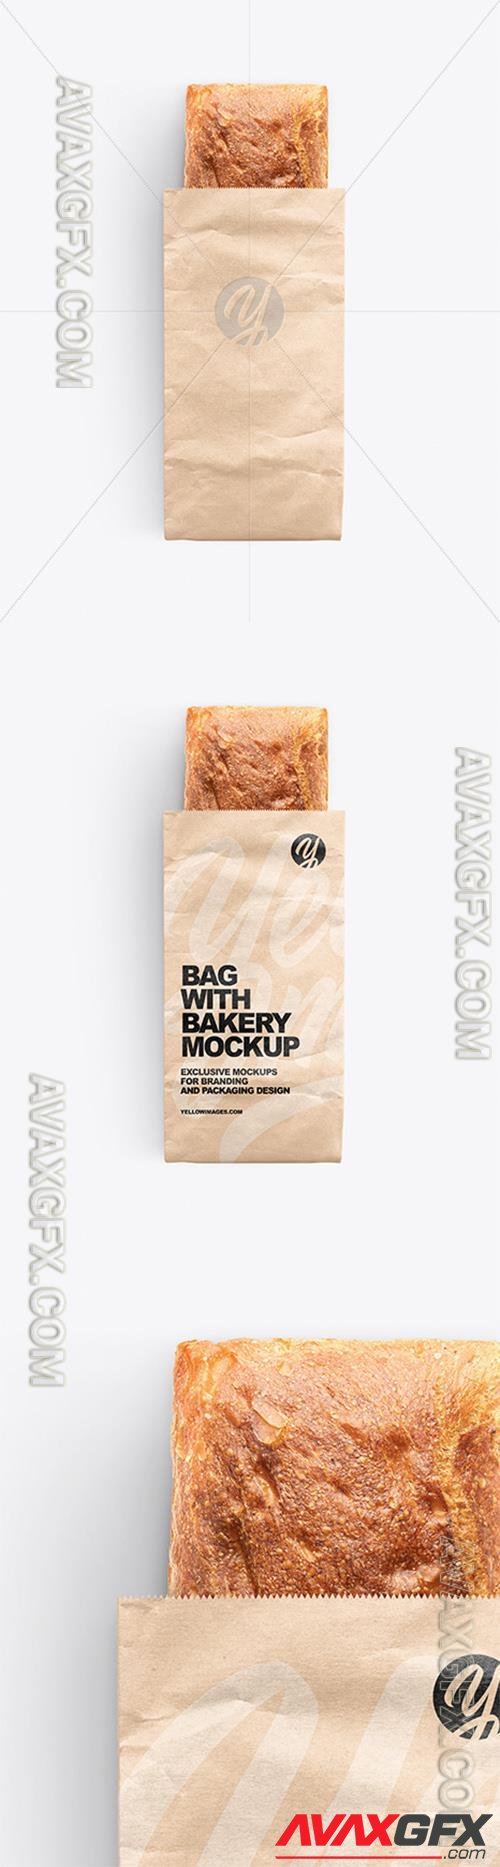 Paper Bag With Bakery Mockup 89301 TIF